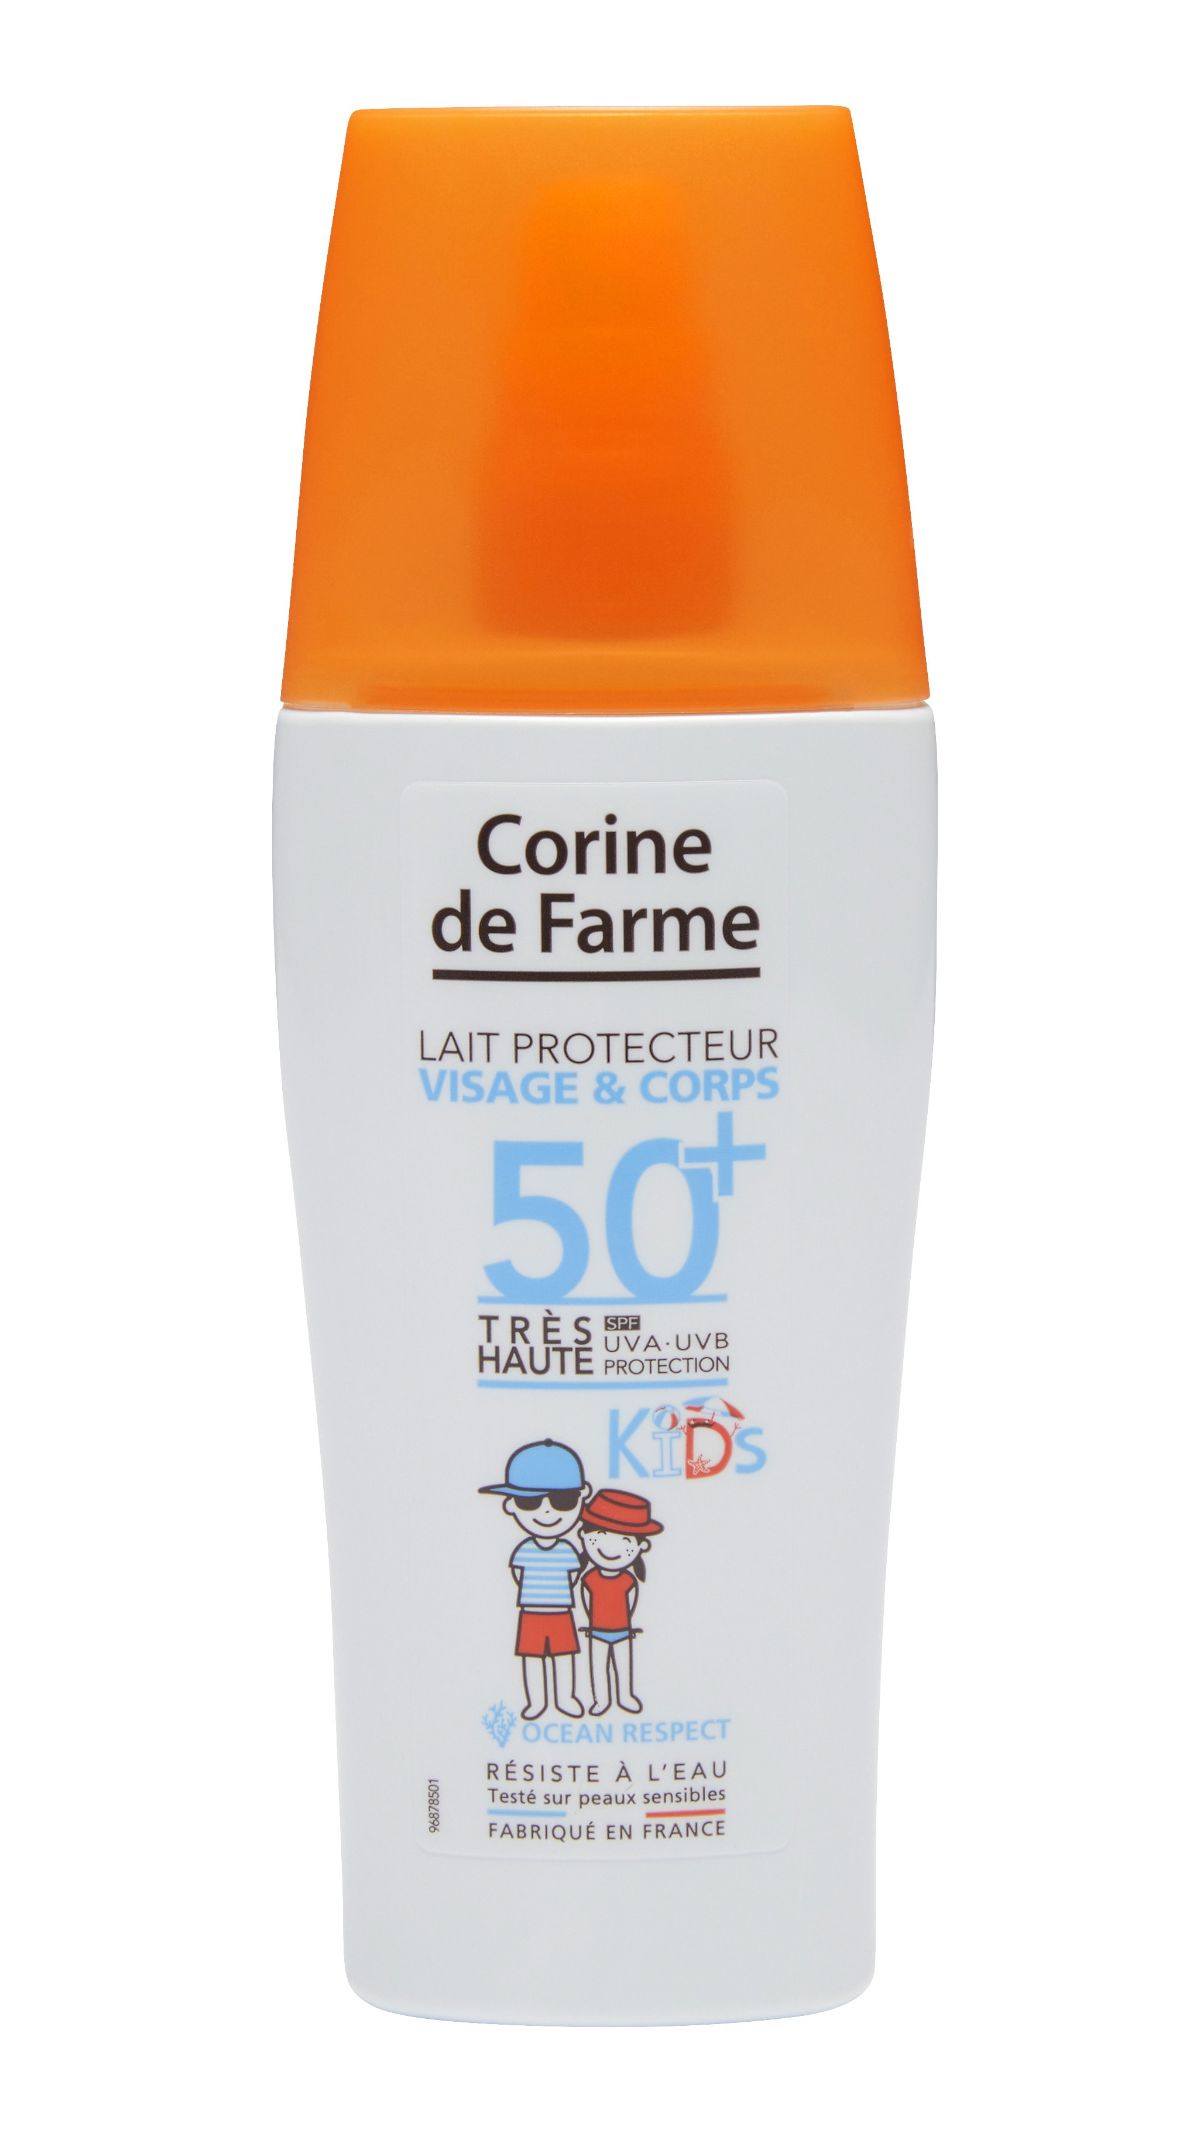 13. Corine de Farme Spray Protecteur Kids Visage and Corps SPF 50